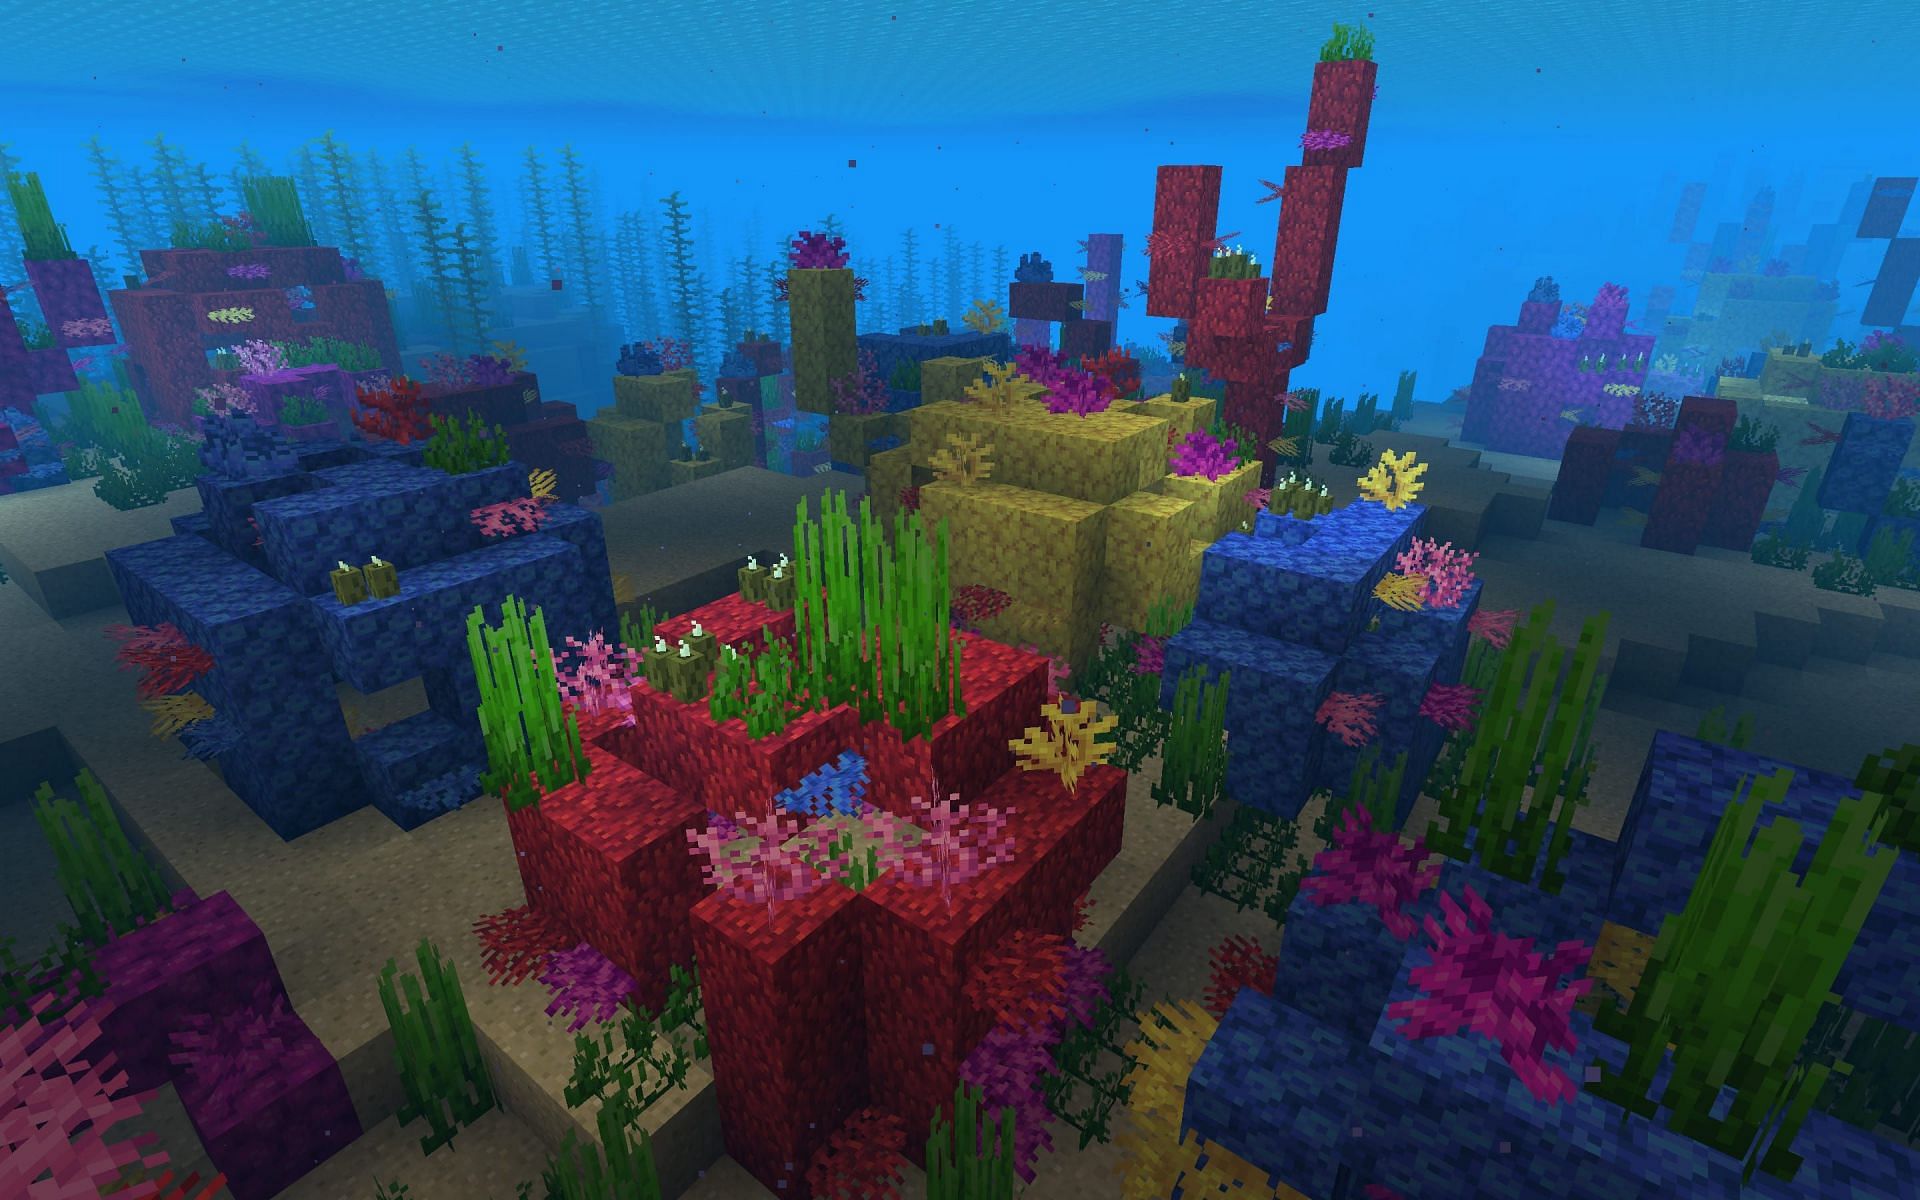 Coral reefs in Warm Ocean (Image via Minecraft)